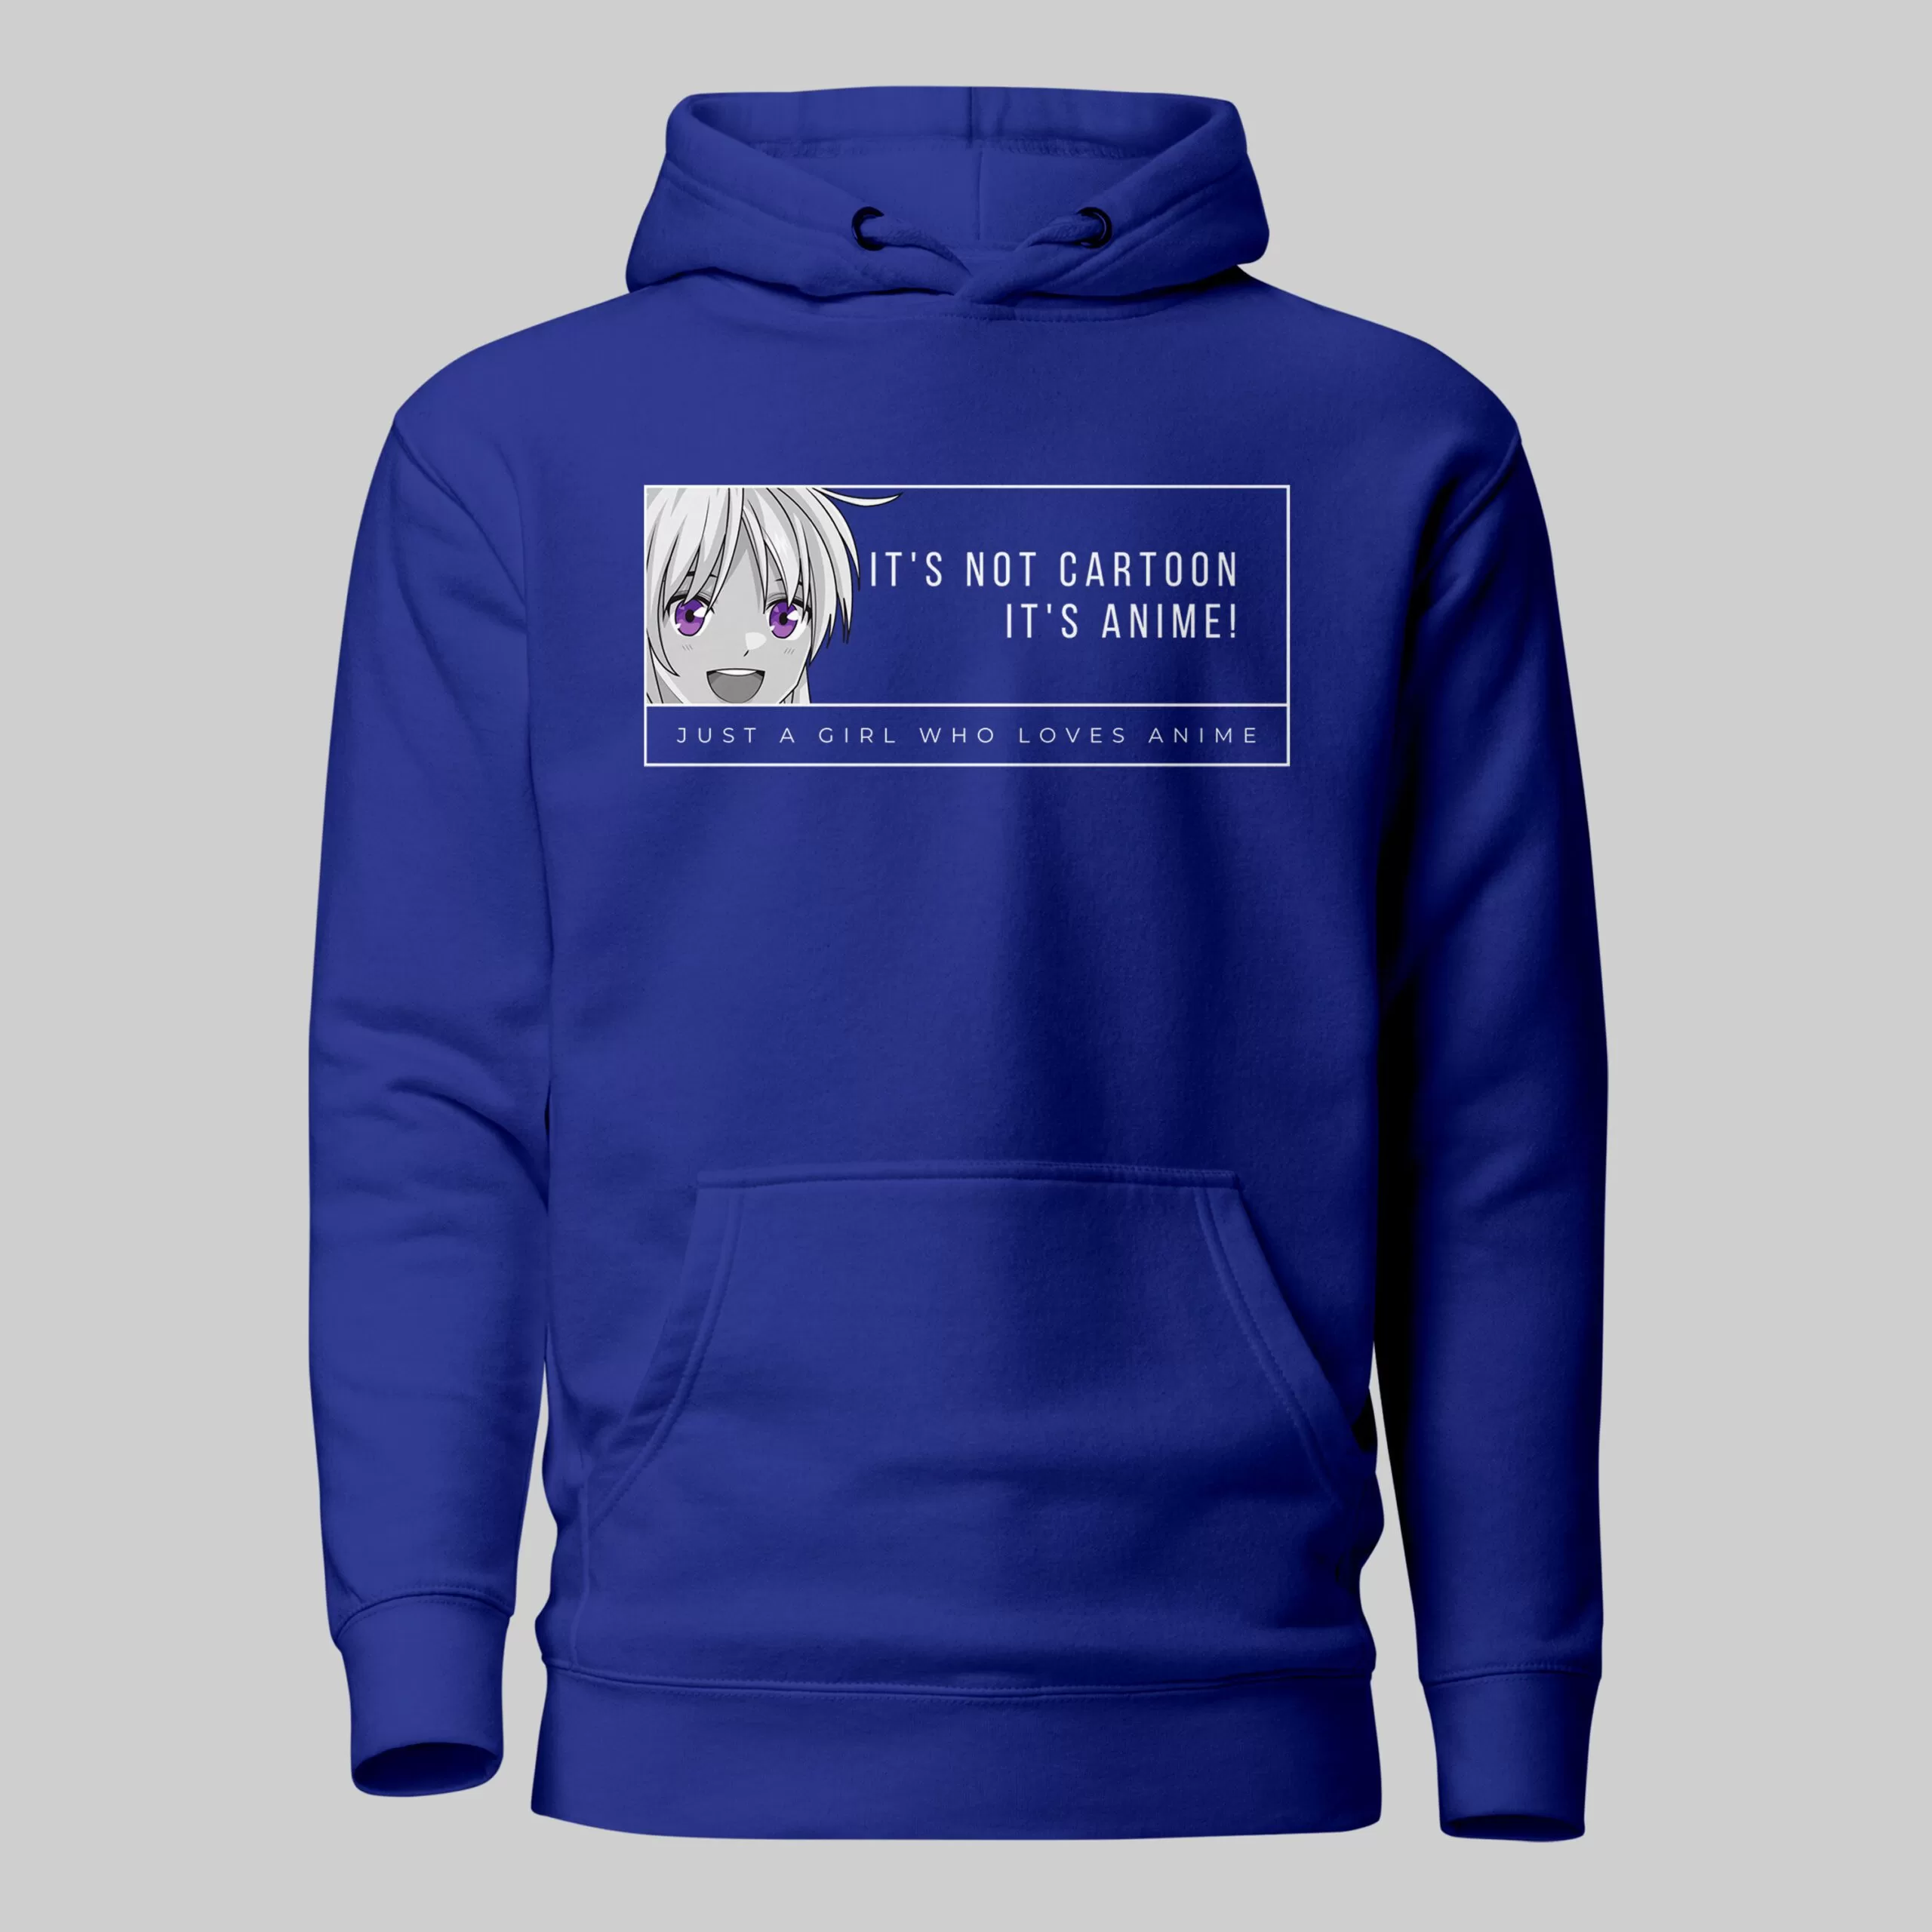 Hoodie Sweatshirt Men Fashion Janpanese Anime Hoodies Men Streetwear Winter  Warm Fashion Unisex Sweatshirts Male Harajuku at Rs 20.00 | Fashion Hoodies  | ID: 2850103272012